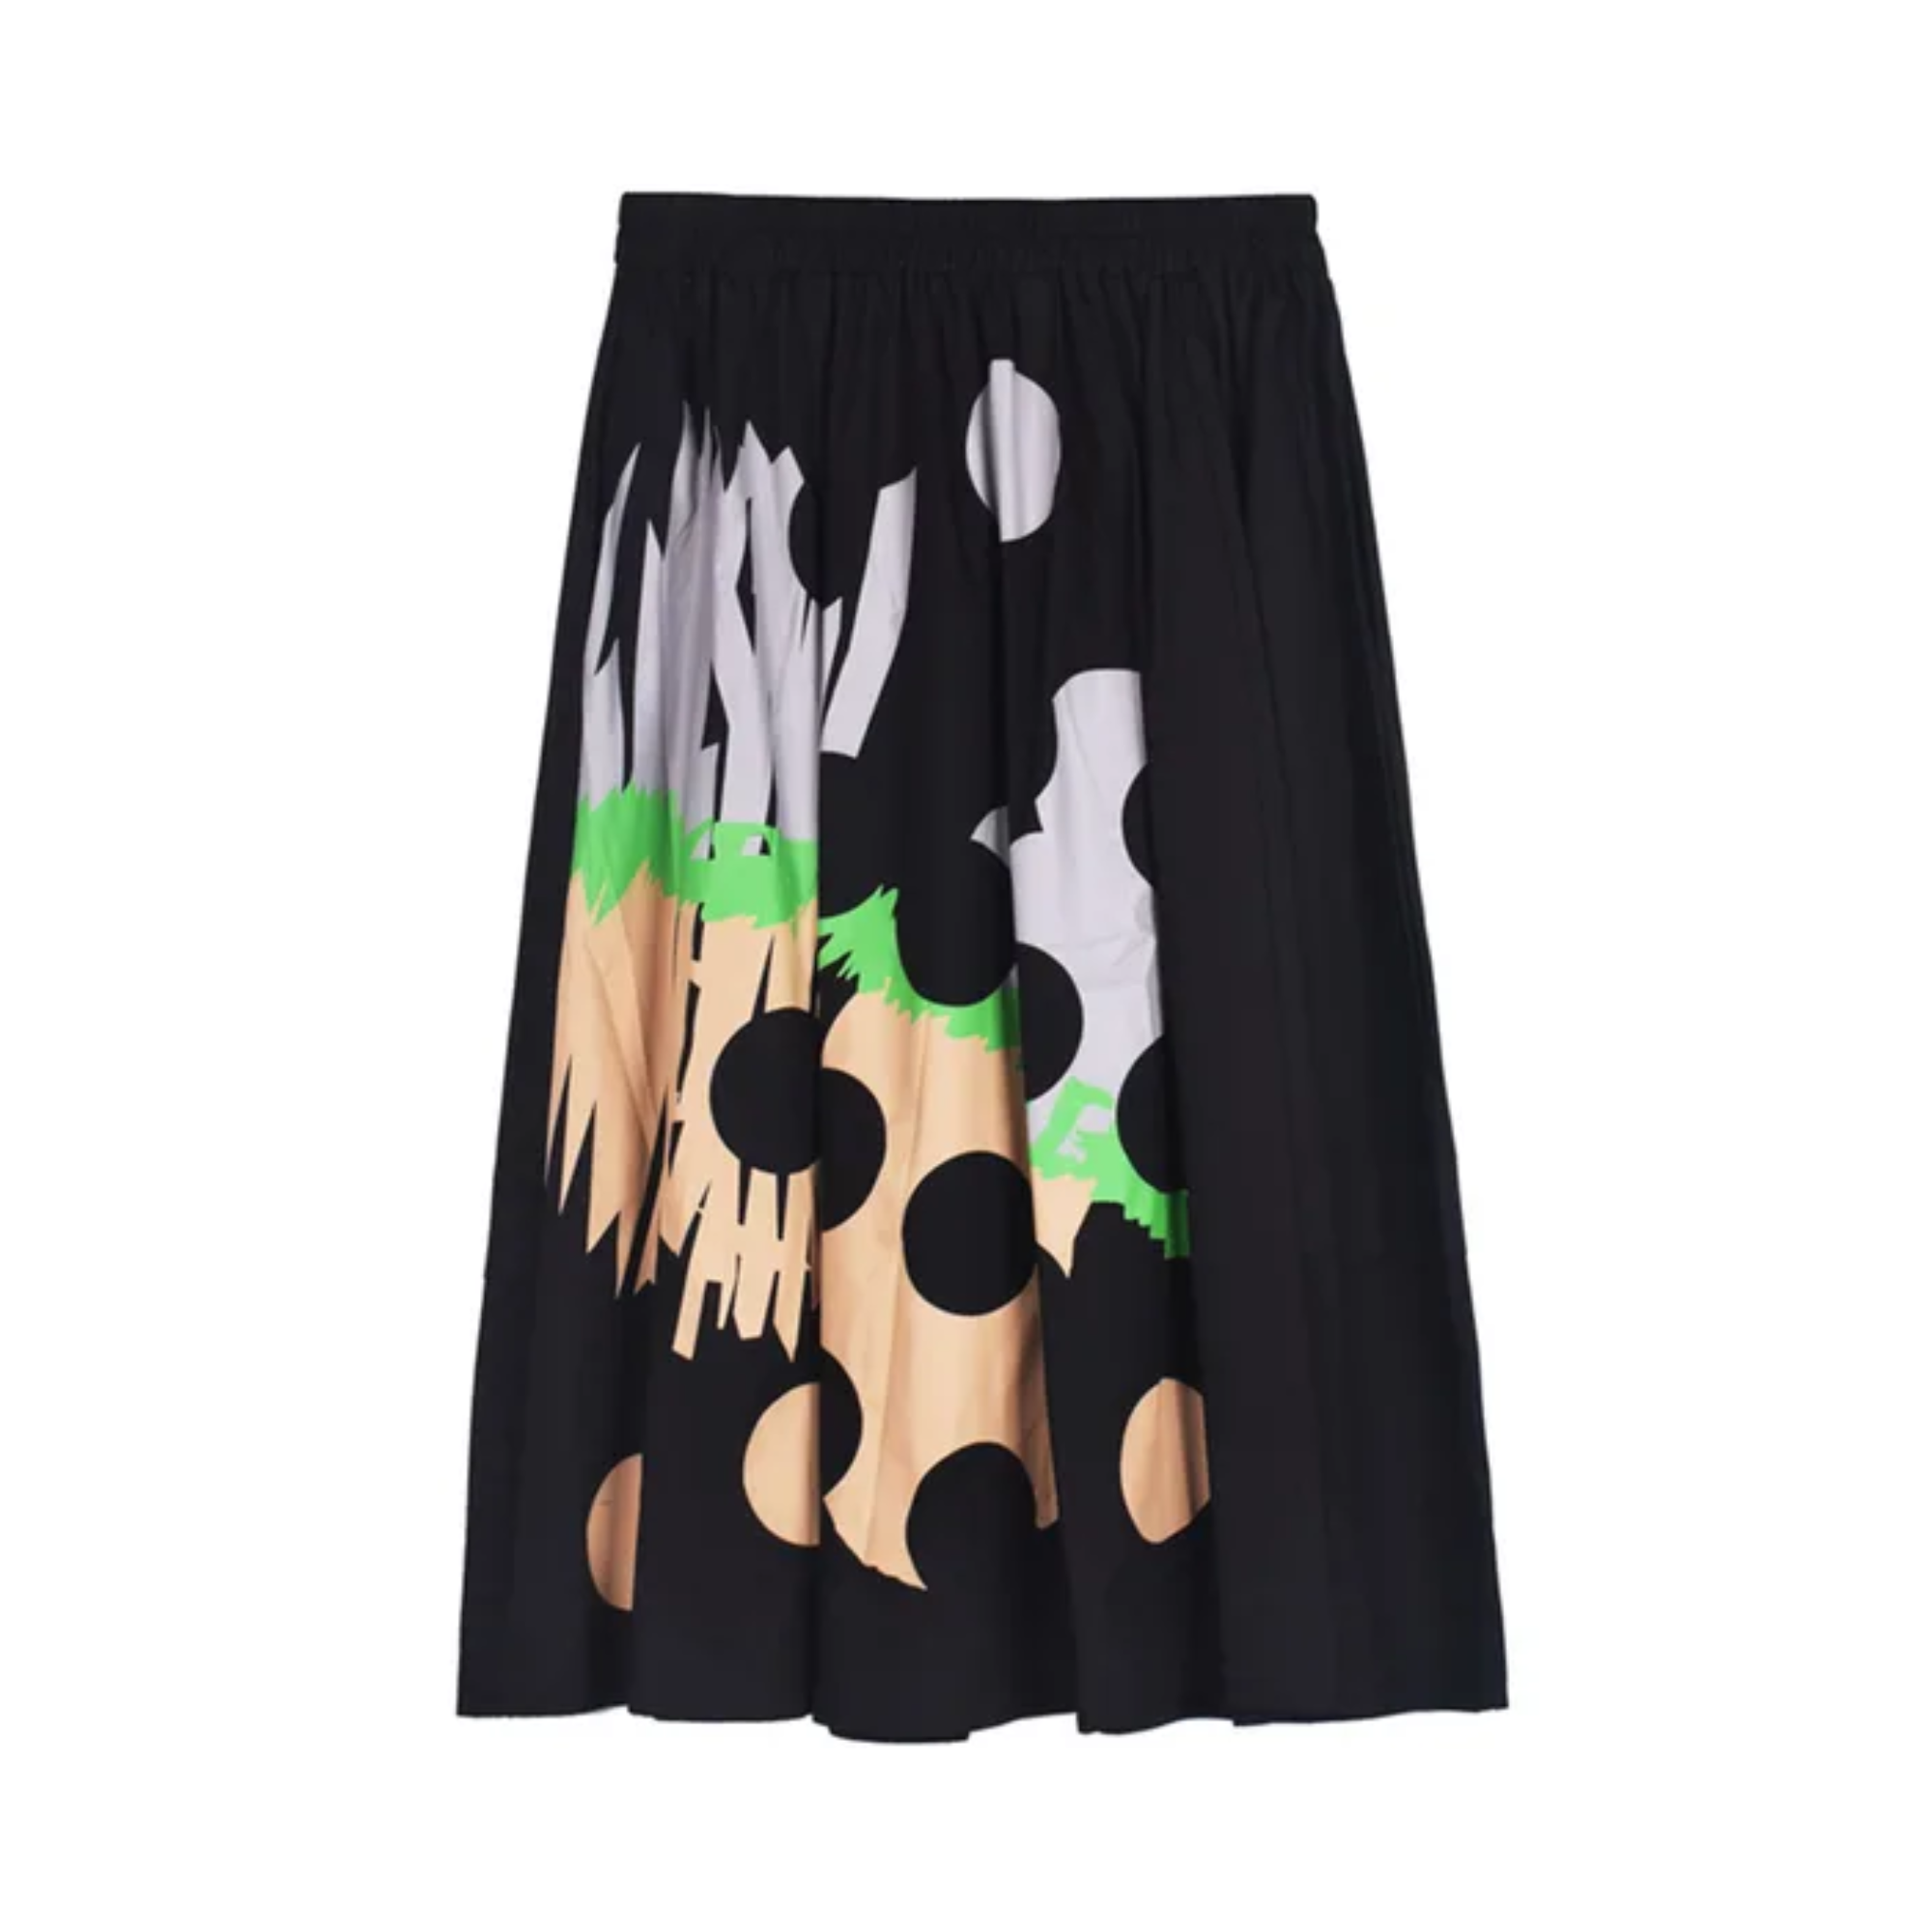 Yure | Polka Dot Green A-line Midi Skirt